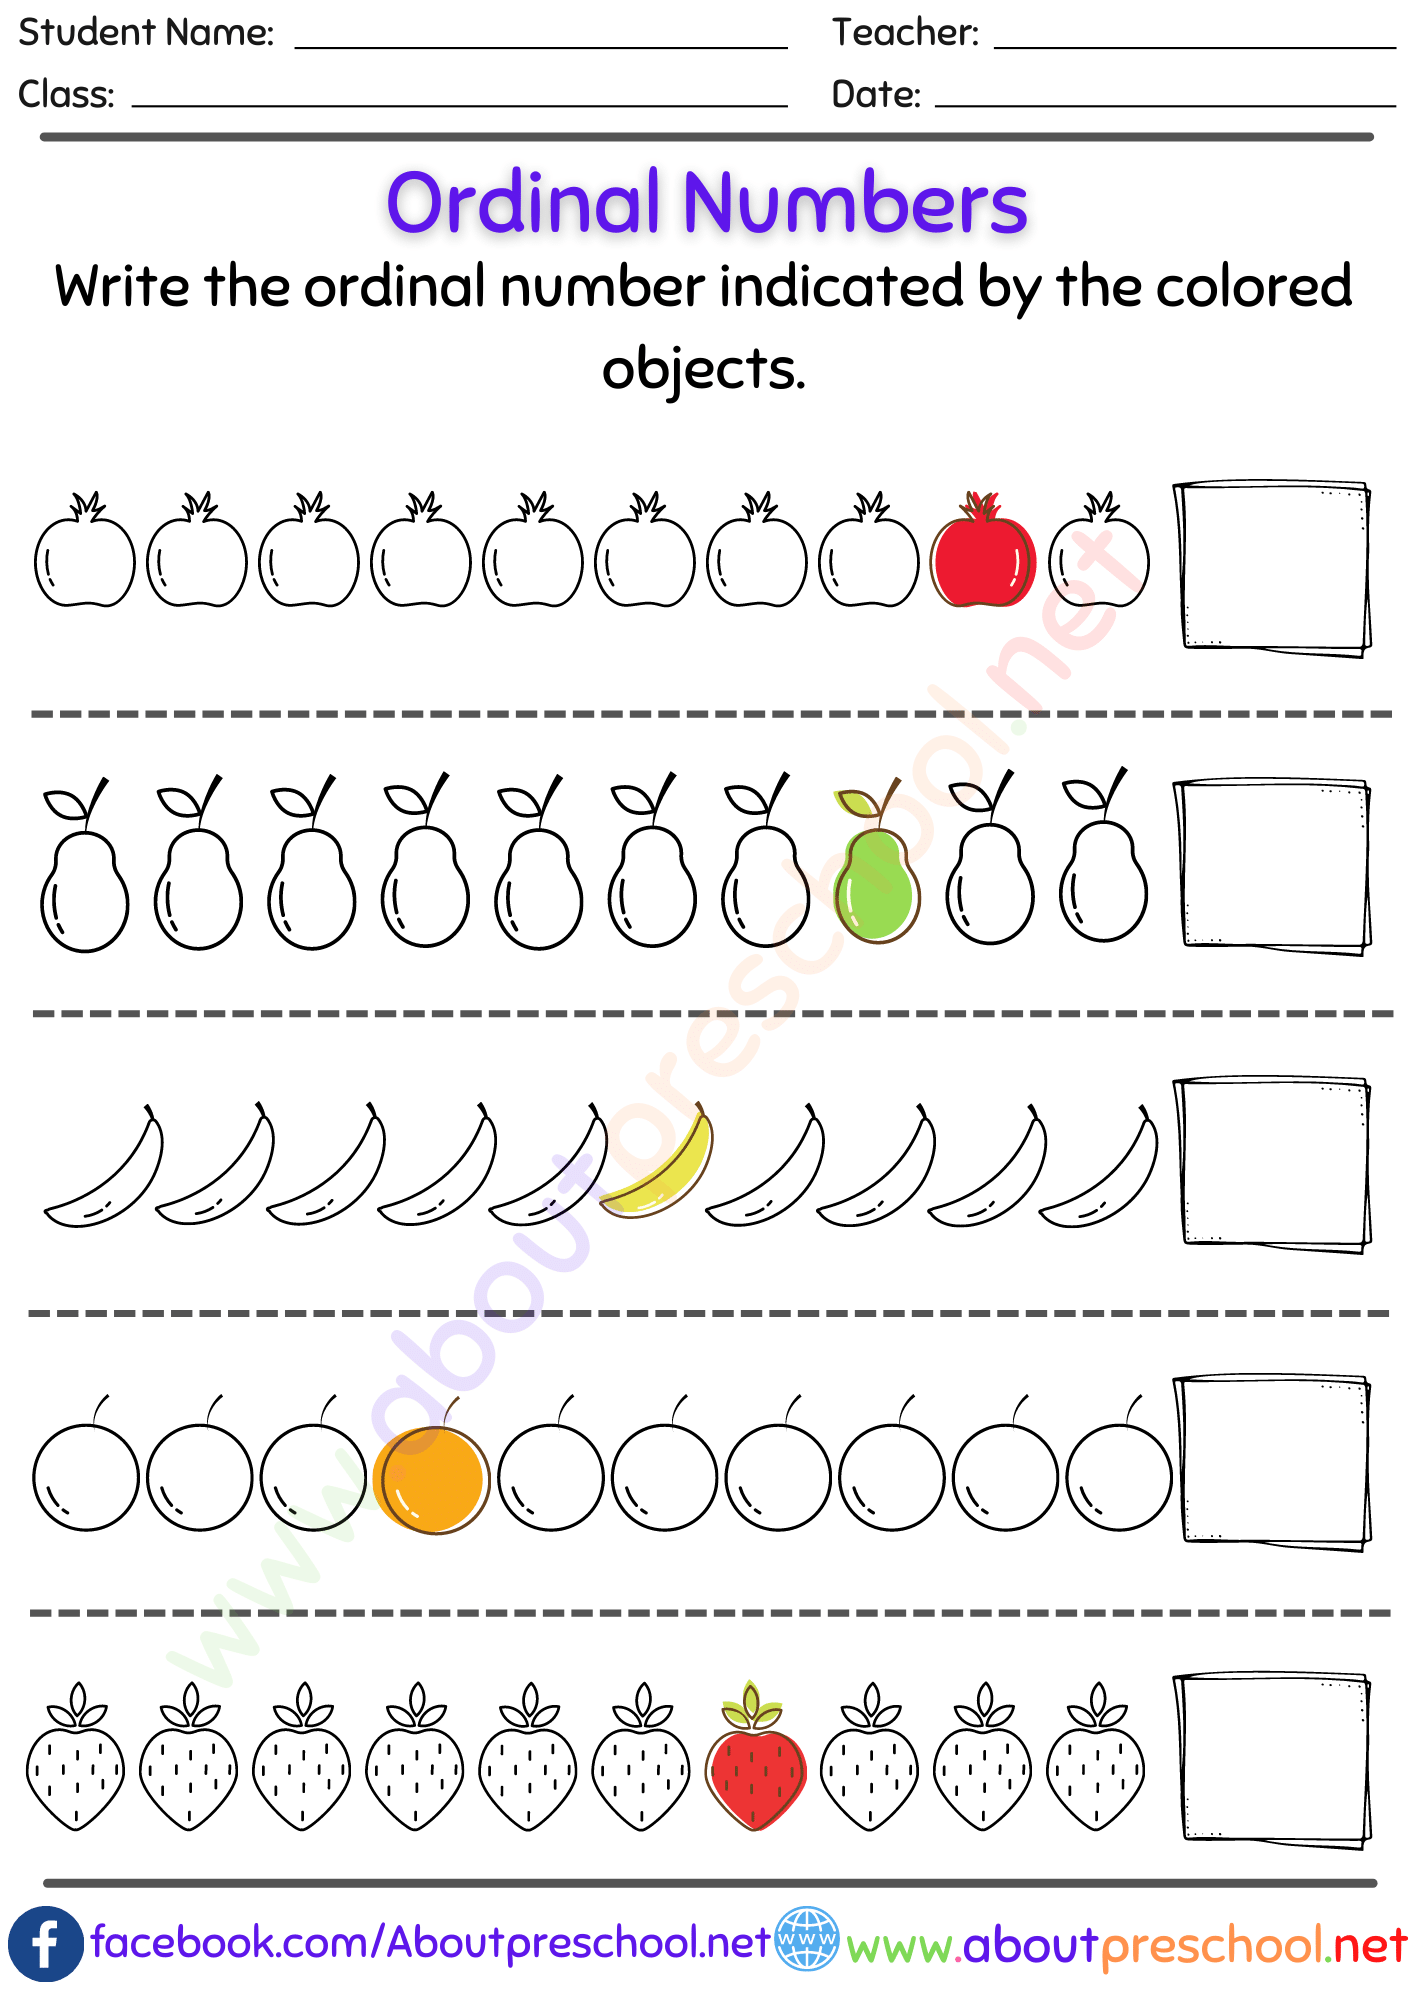 Kindergarten Or Grade 1 Ordinal Numbers Worksheet About Preschool